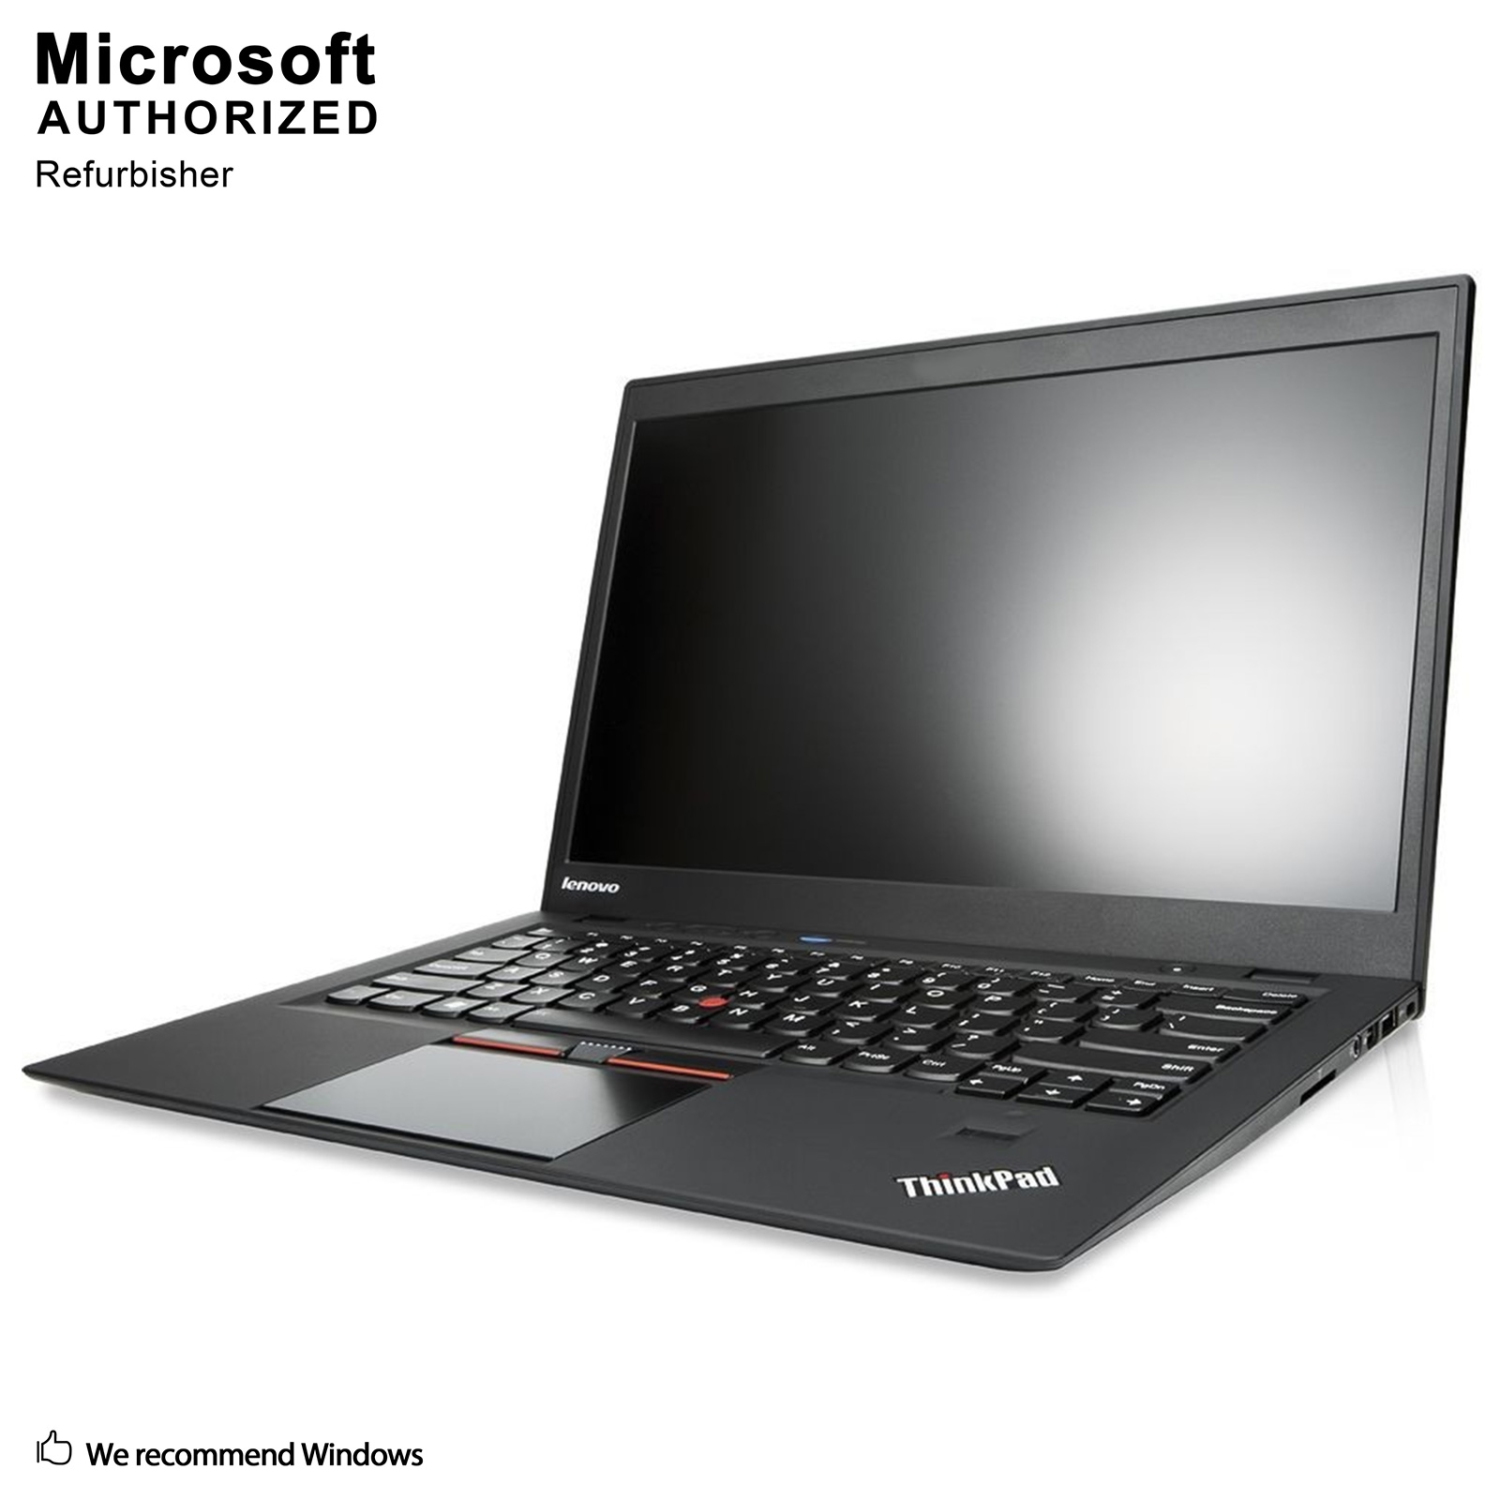 Lenovo ThinkPad X1 Carbon 14" Business Laptop, Intel Core I7-3667U 2.0GHZ, 16G DDR3L, 256G SSD, Windows 10 Pro 64 Bit-Multi-Language Supports English/Spanish/French-Refurbished